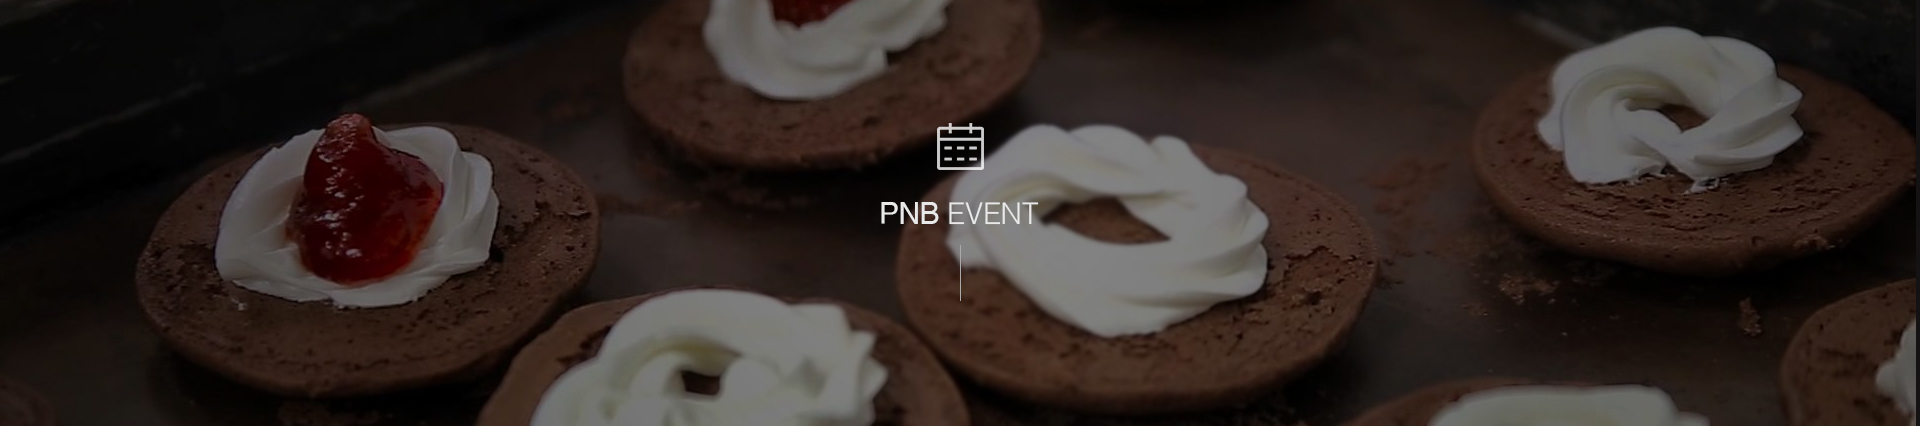 pnb event